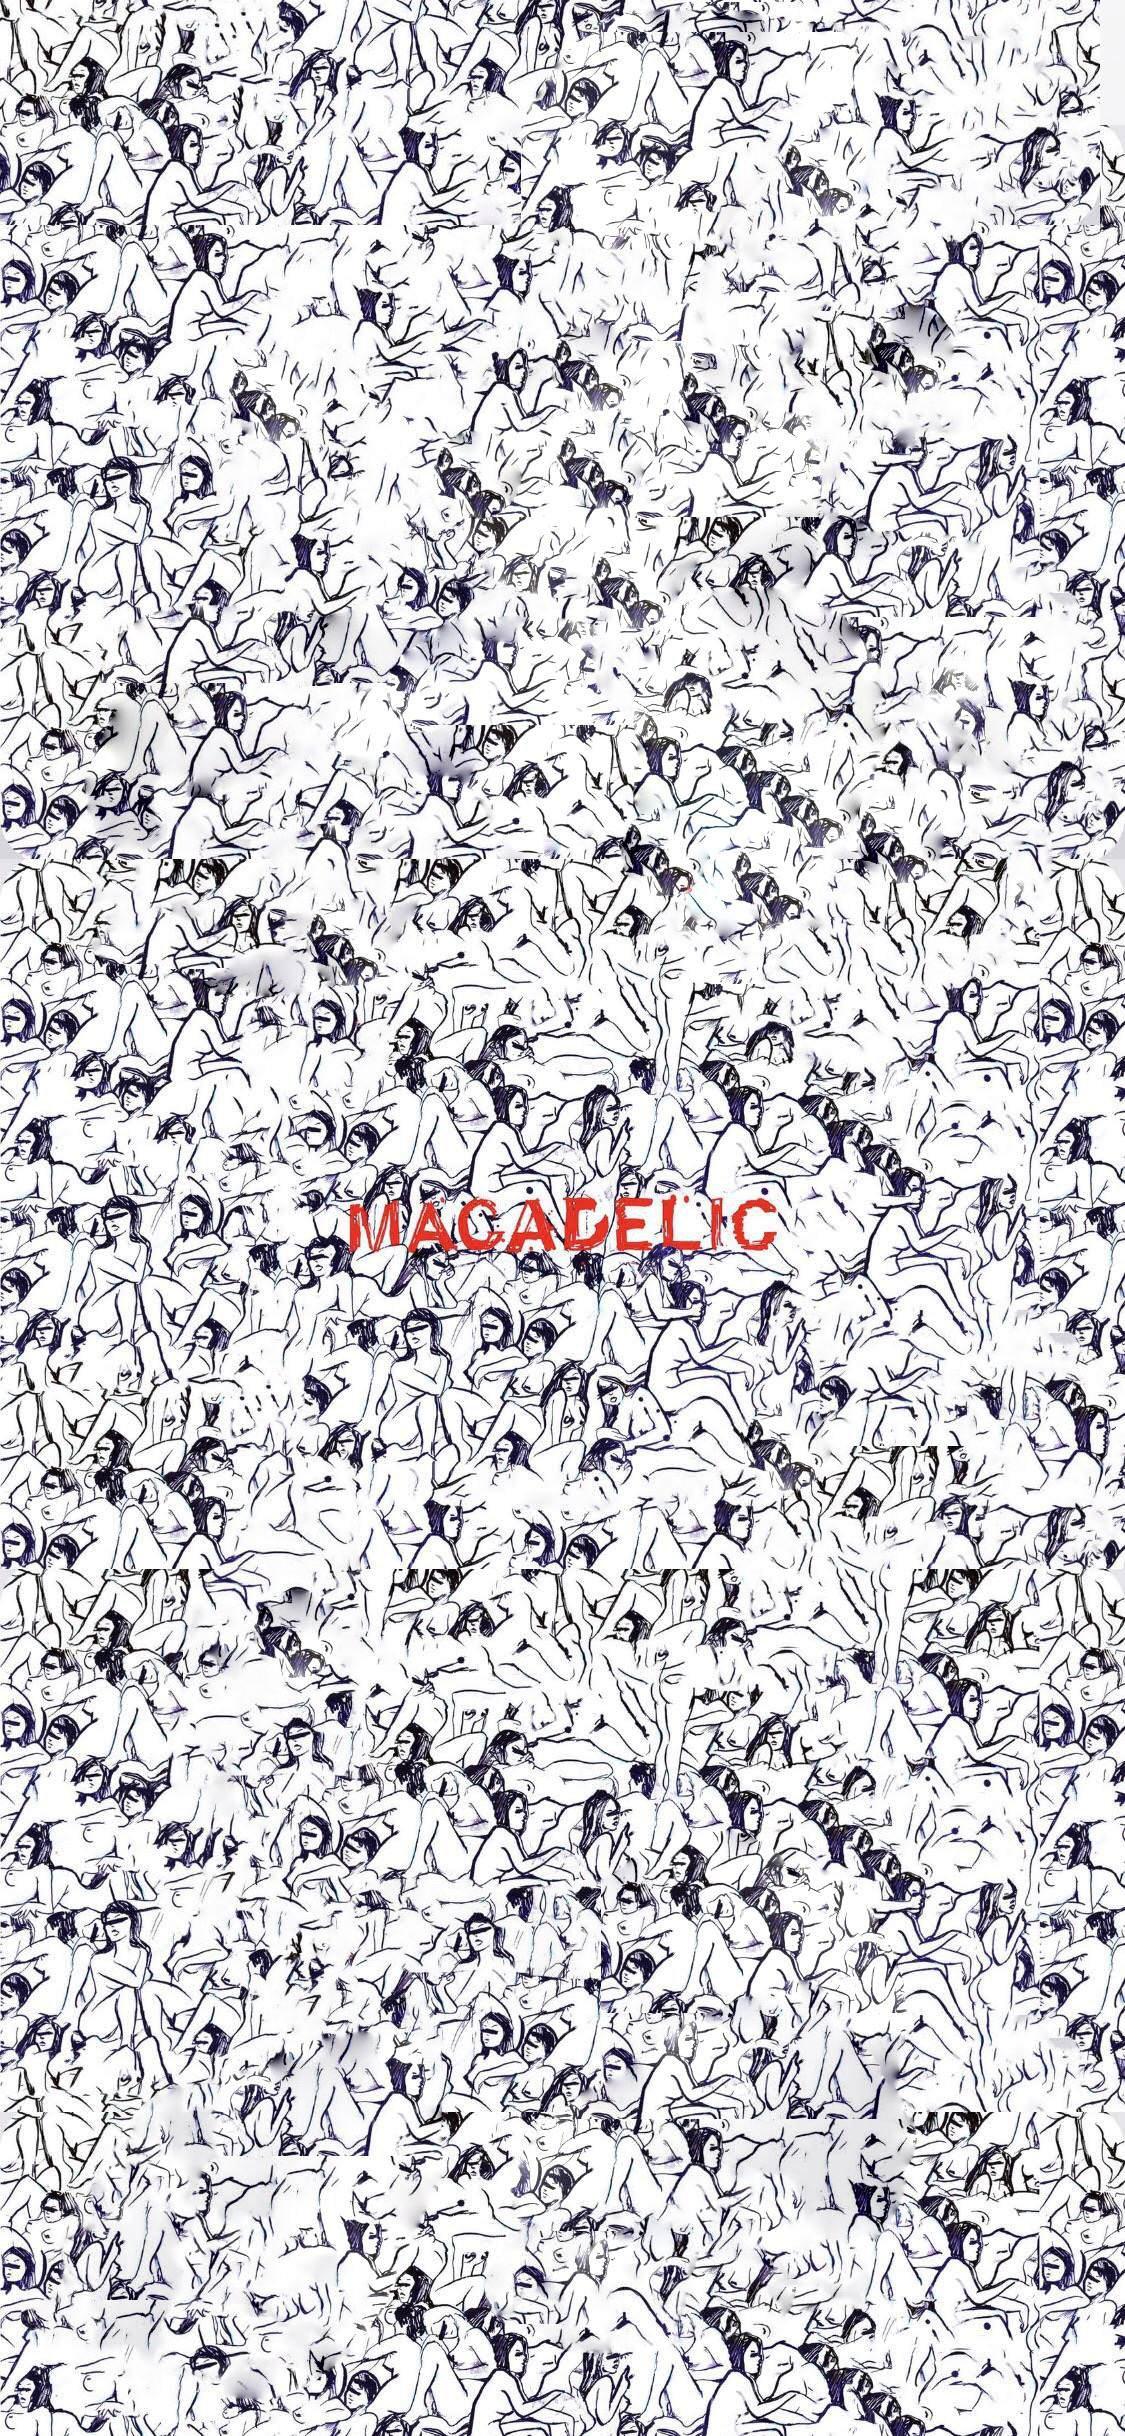 Mac Miller Album Cover Wallpapers